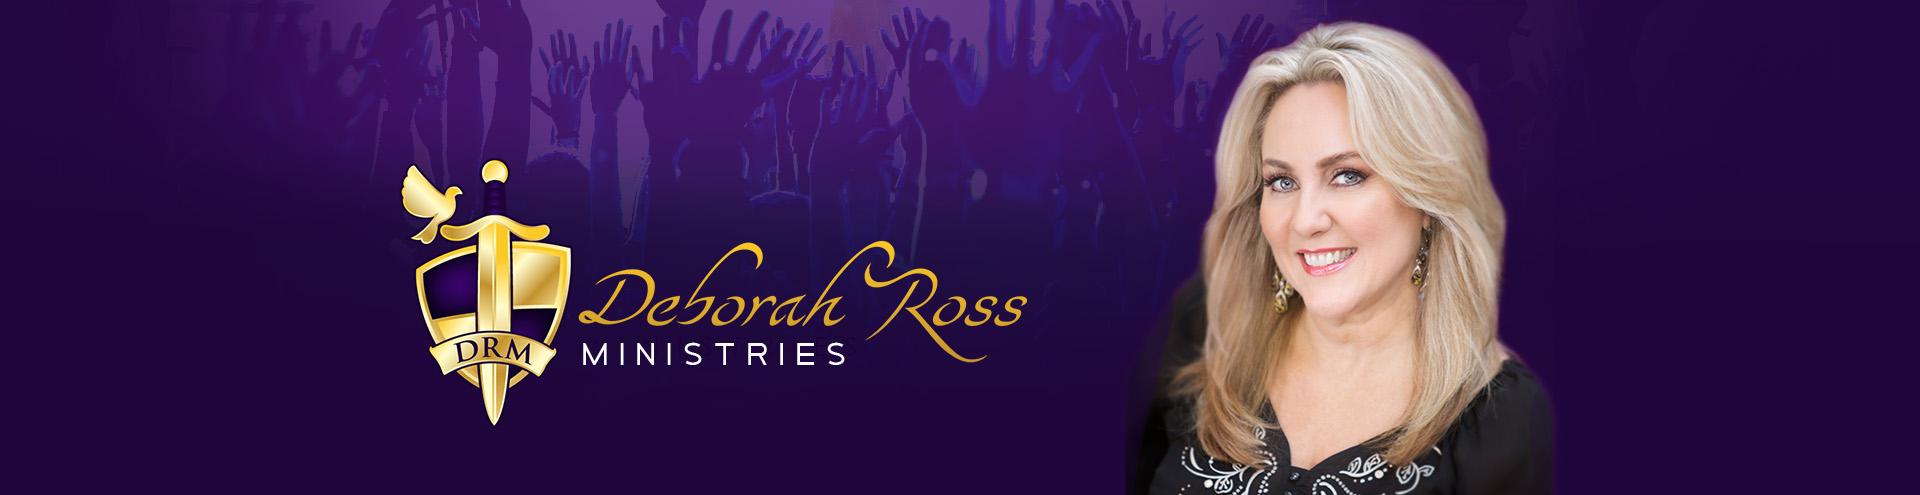 Deborah Ross Ministries, Inc.